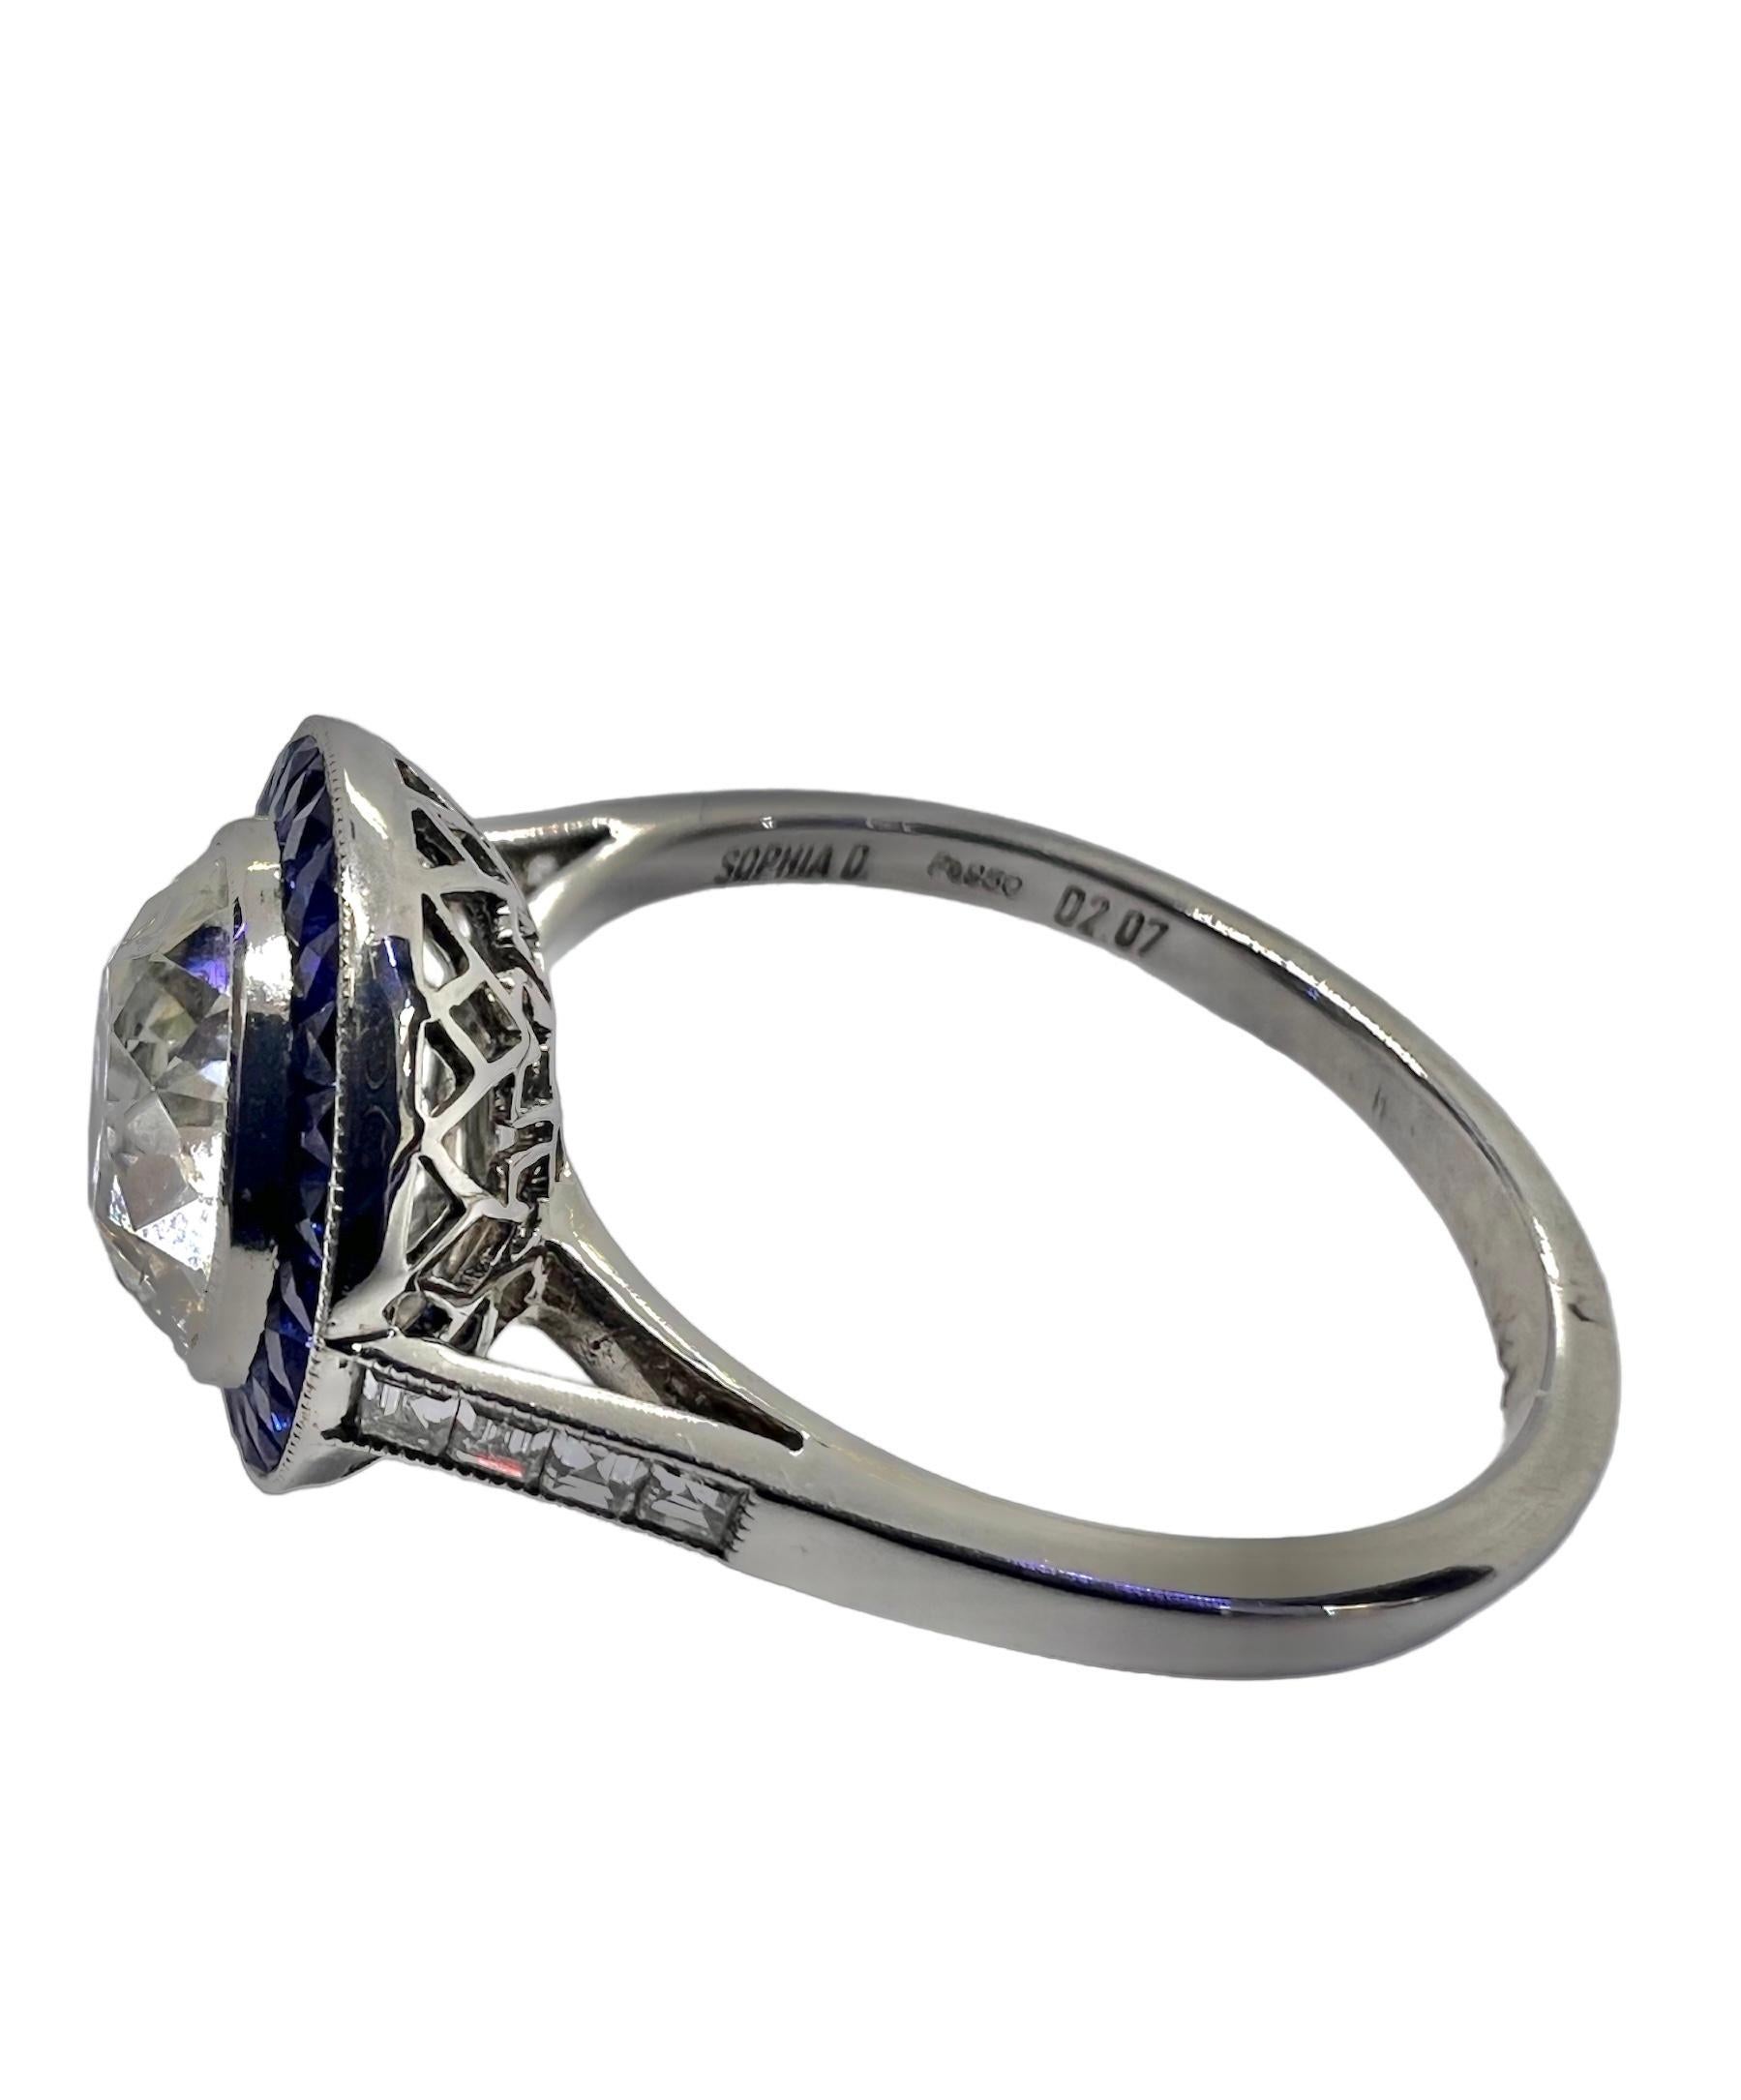 Round Cut Sophia D. 2.07 Carat Diamond and Blue Sapphire Art Deco Ring For Sale